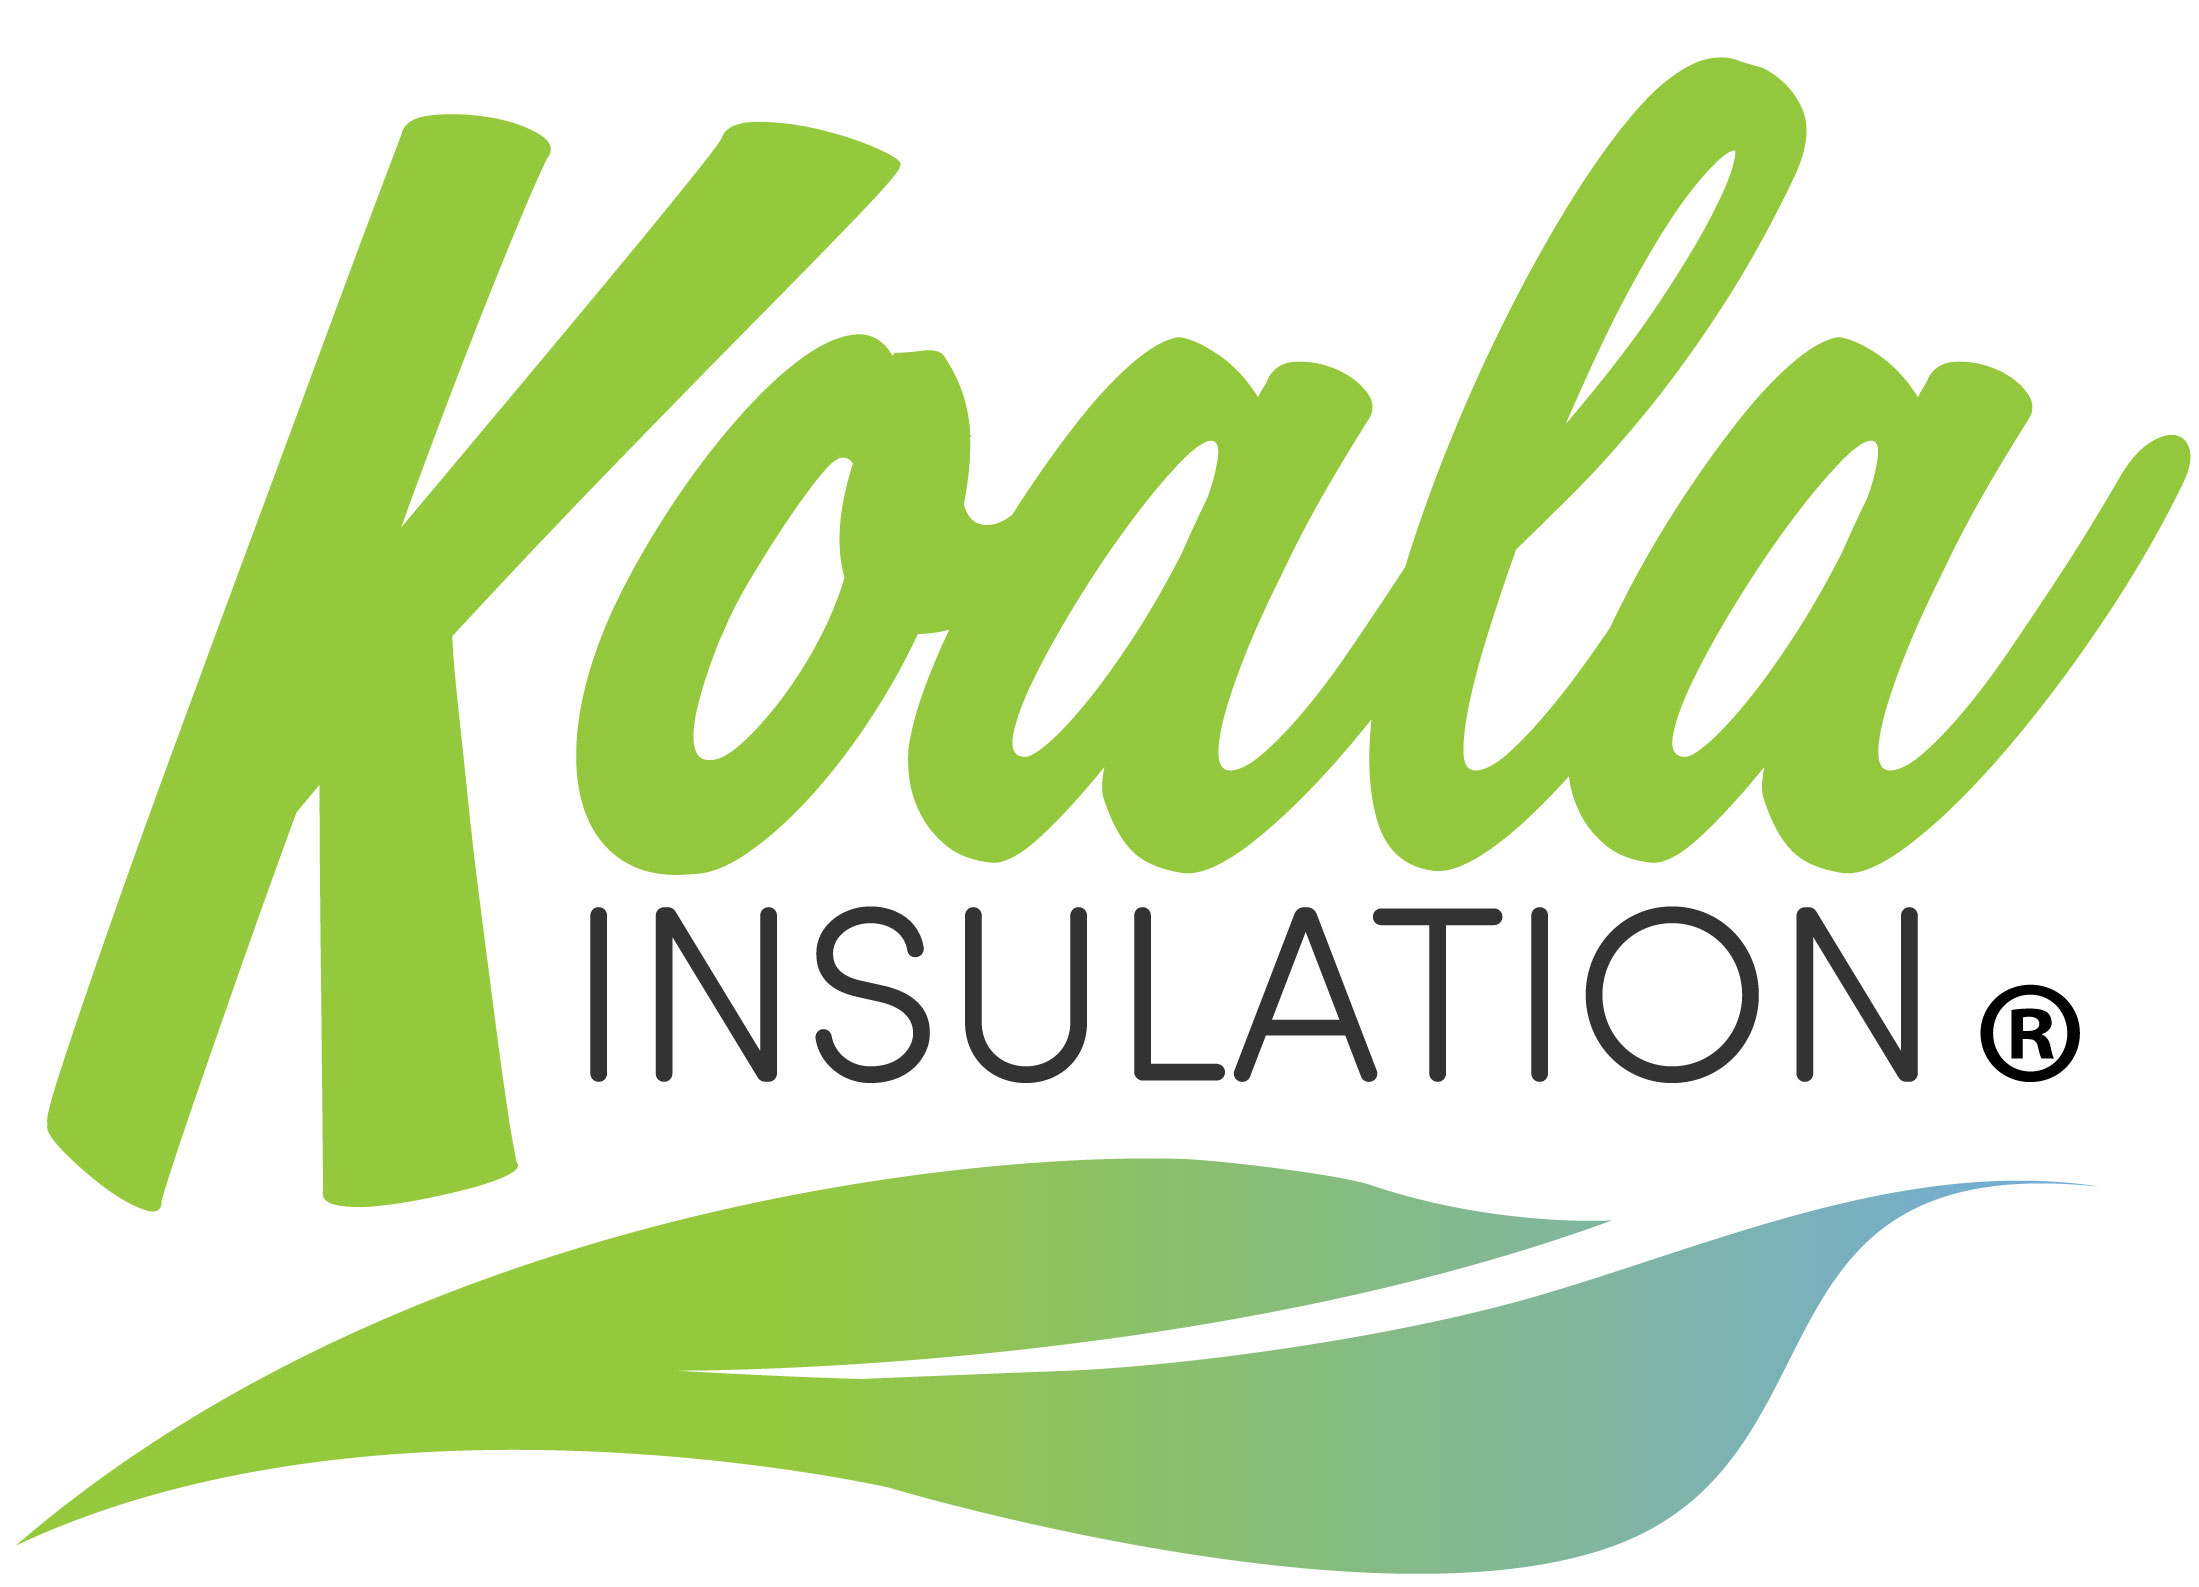 Koala Insulation of Dallas Logo